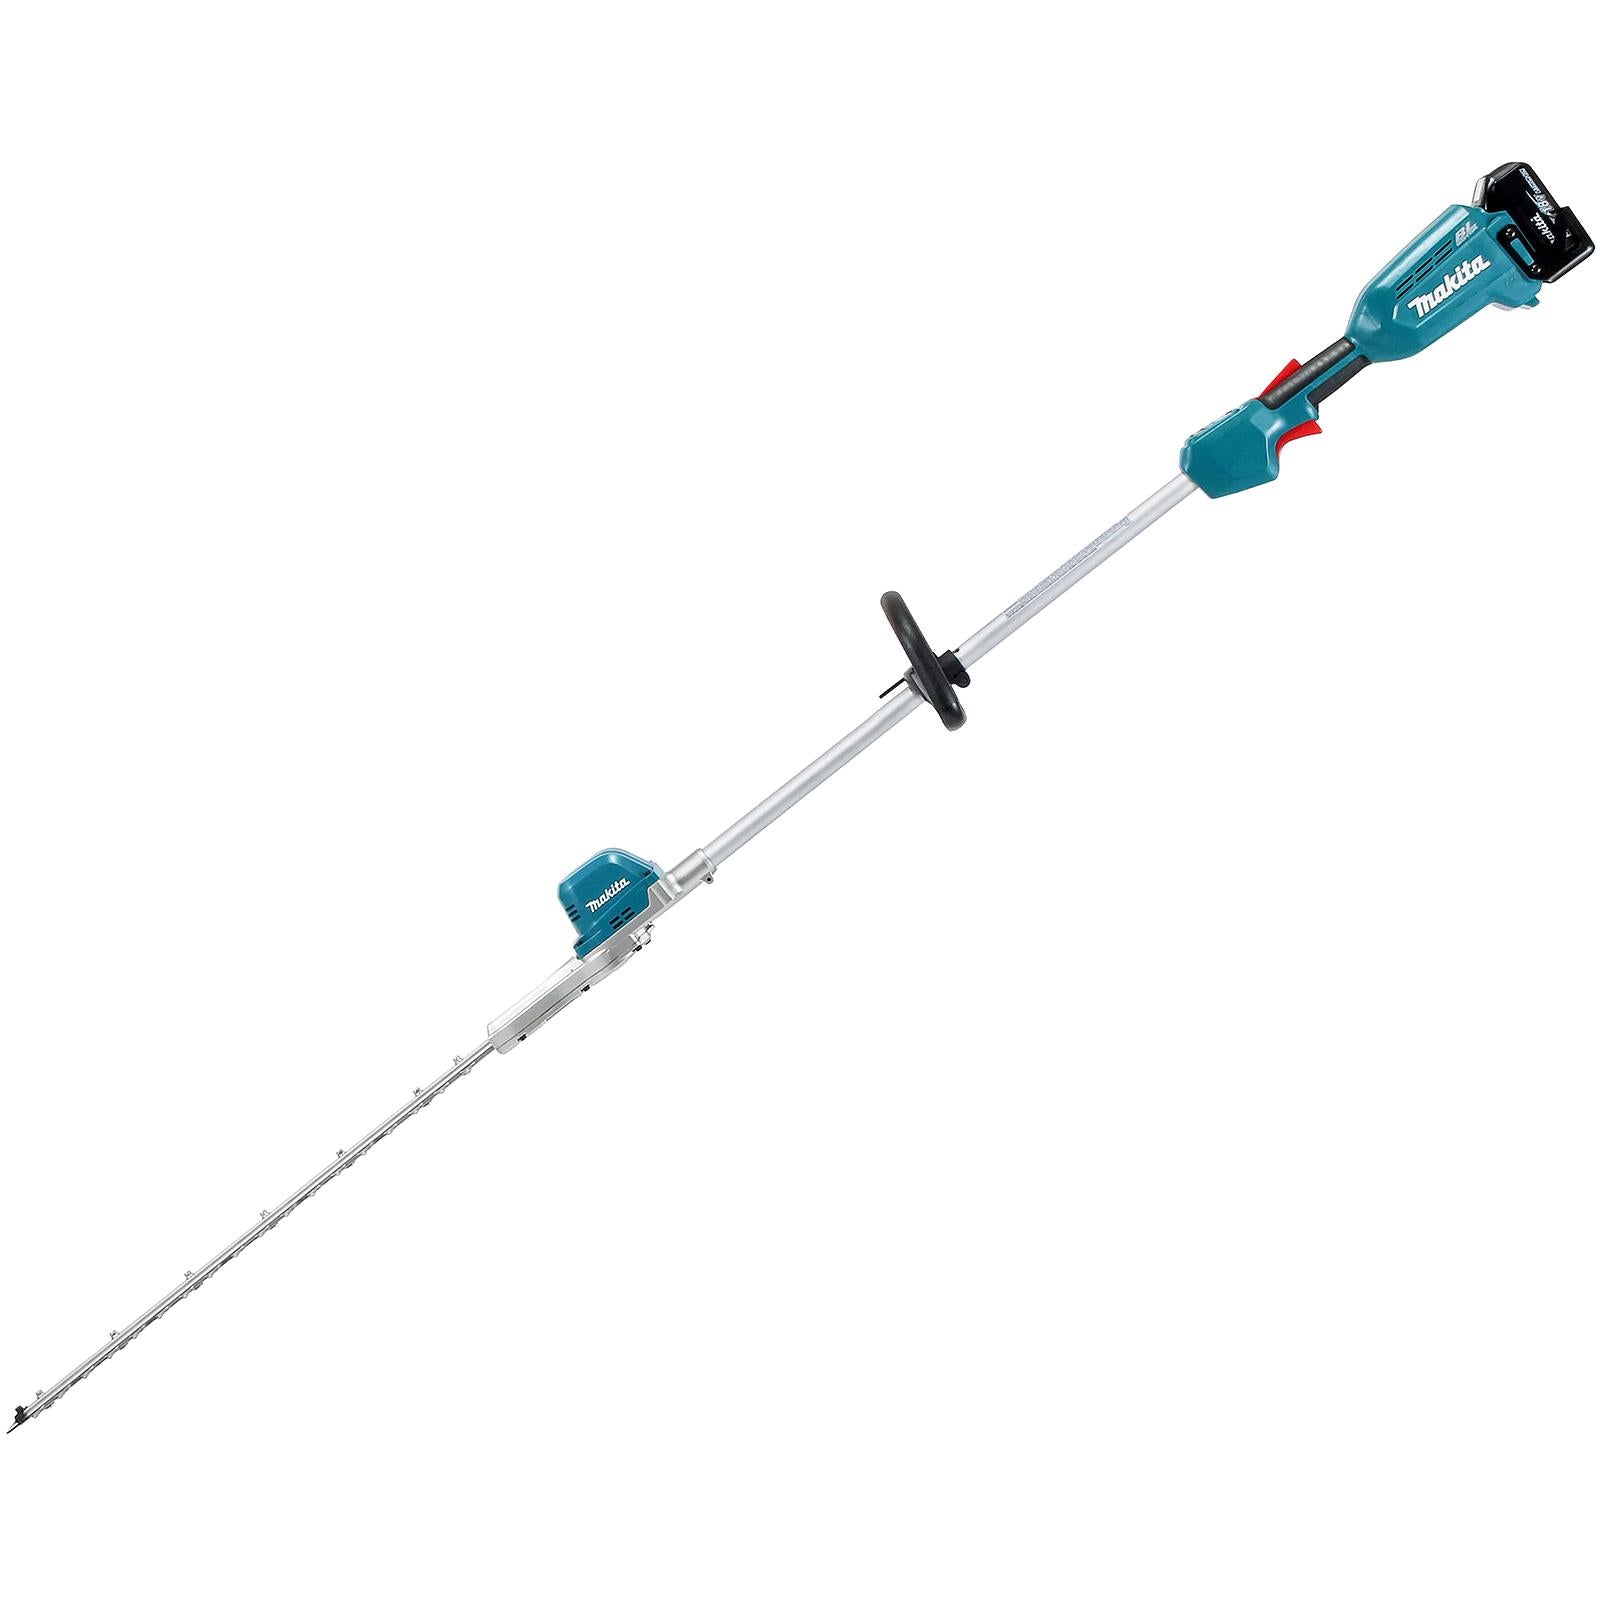 Makita Pole Hedge Trimmer Kit 60cm 18V LXT Li-ion Brushless Cordless 2 x 5Ah Battery and Charger Garden Bush Cutter Cutting DUN600LRTE